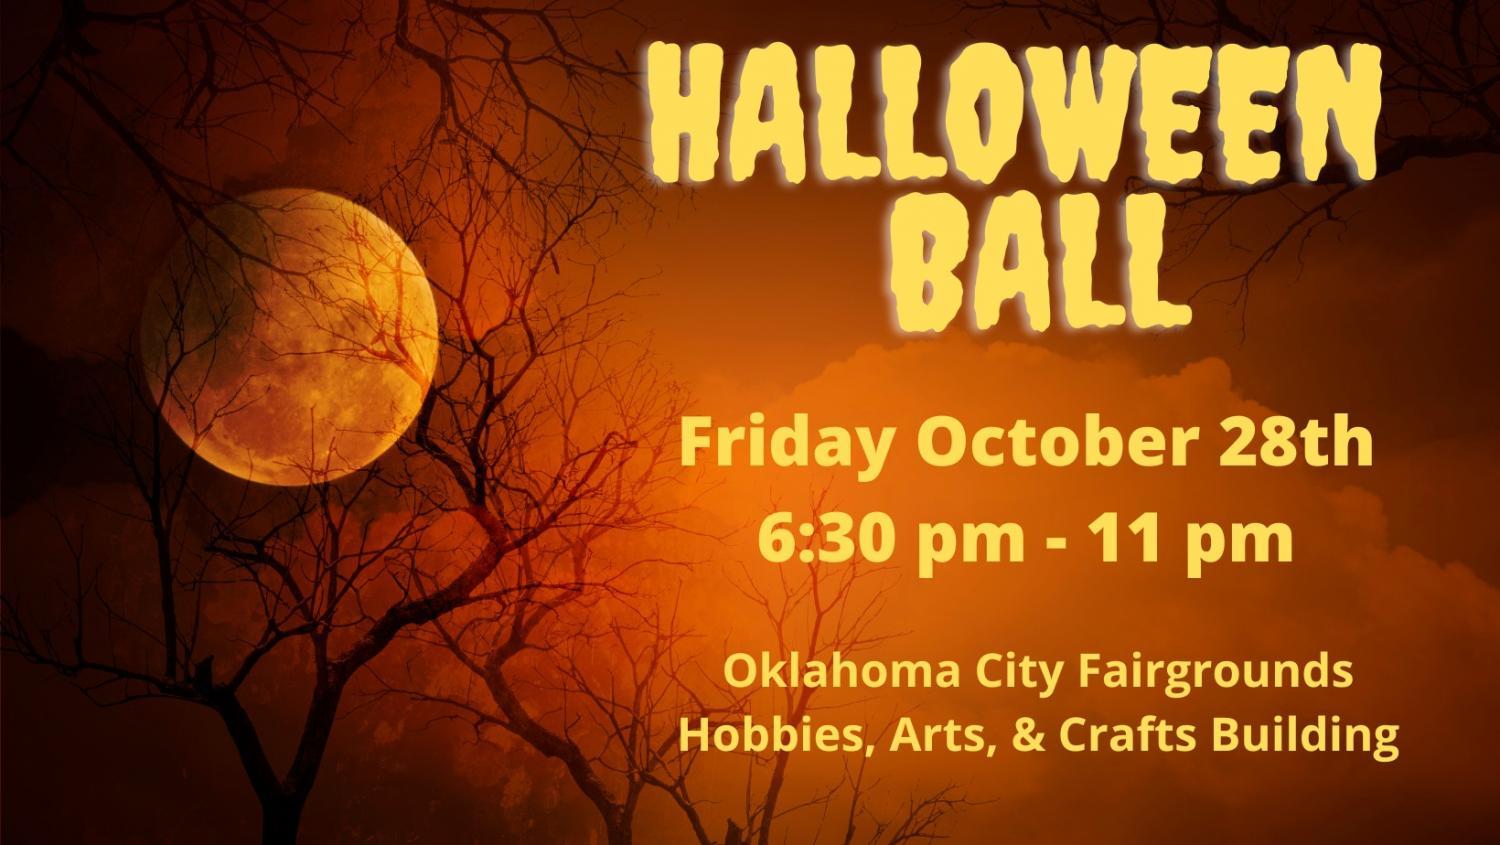 Halloween Ball
Fri Oct 28, 6:30 PM - Fri Oct 28, 11:00 PM
in 8 days